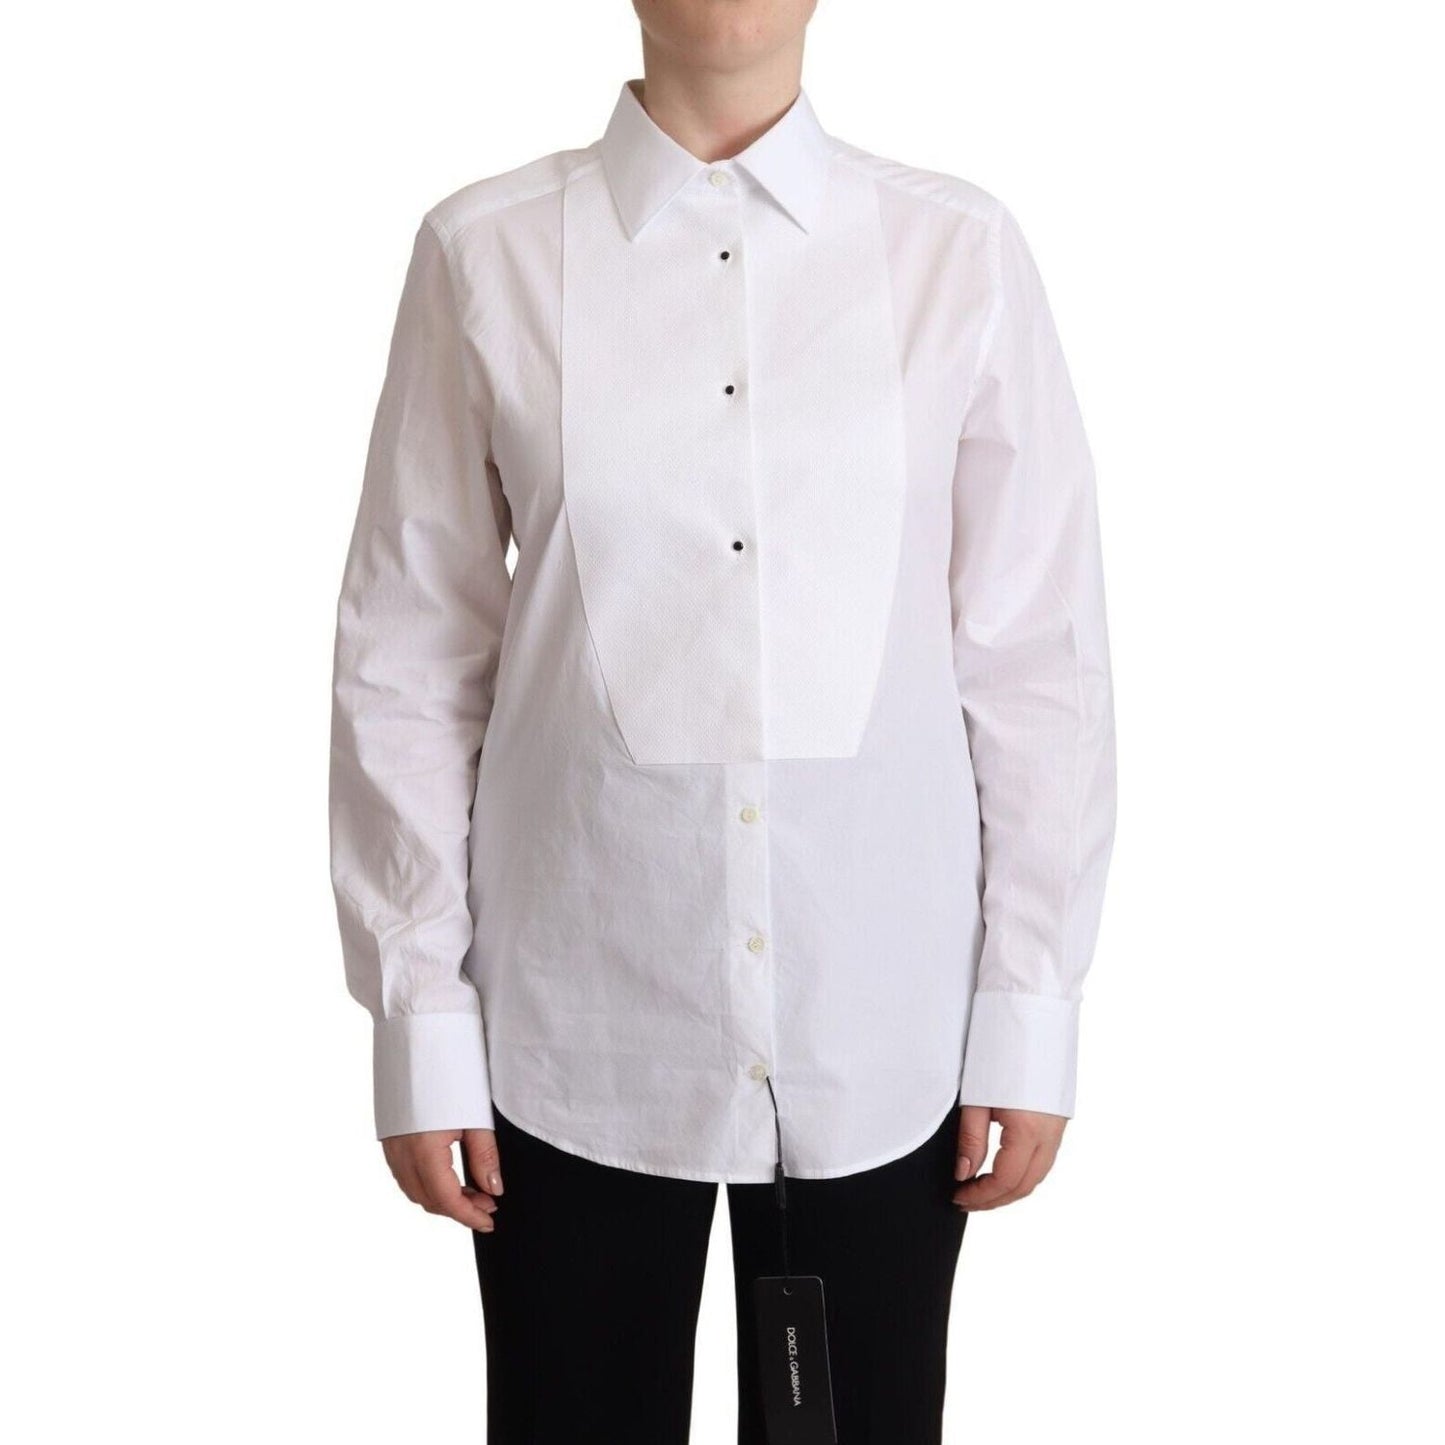 Dolce & Gabbana Elegant White Poplin Dress Shirt white-cotton-dress-collared-long-sleeves-shirt-top